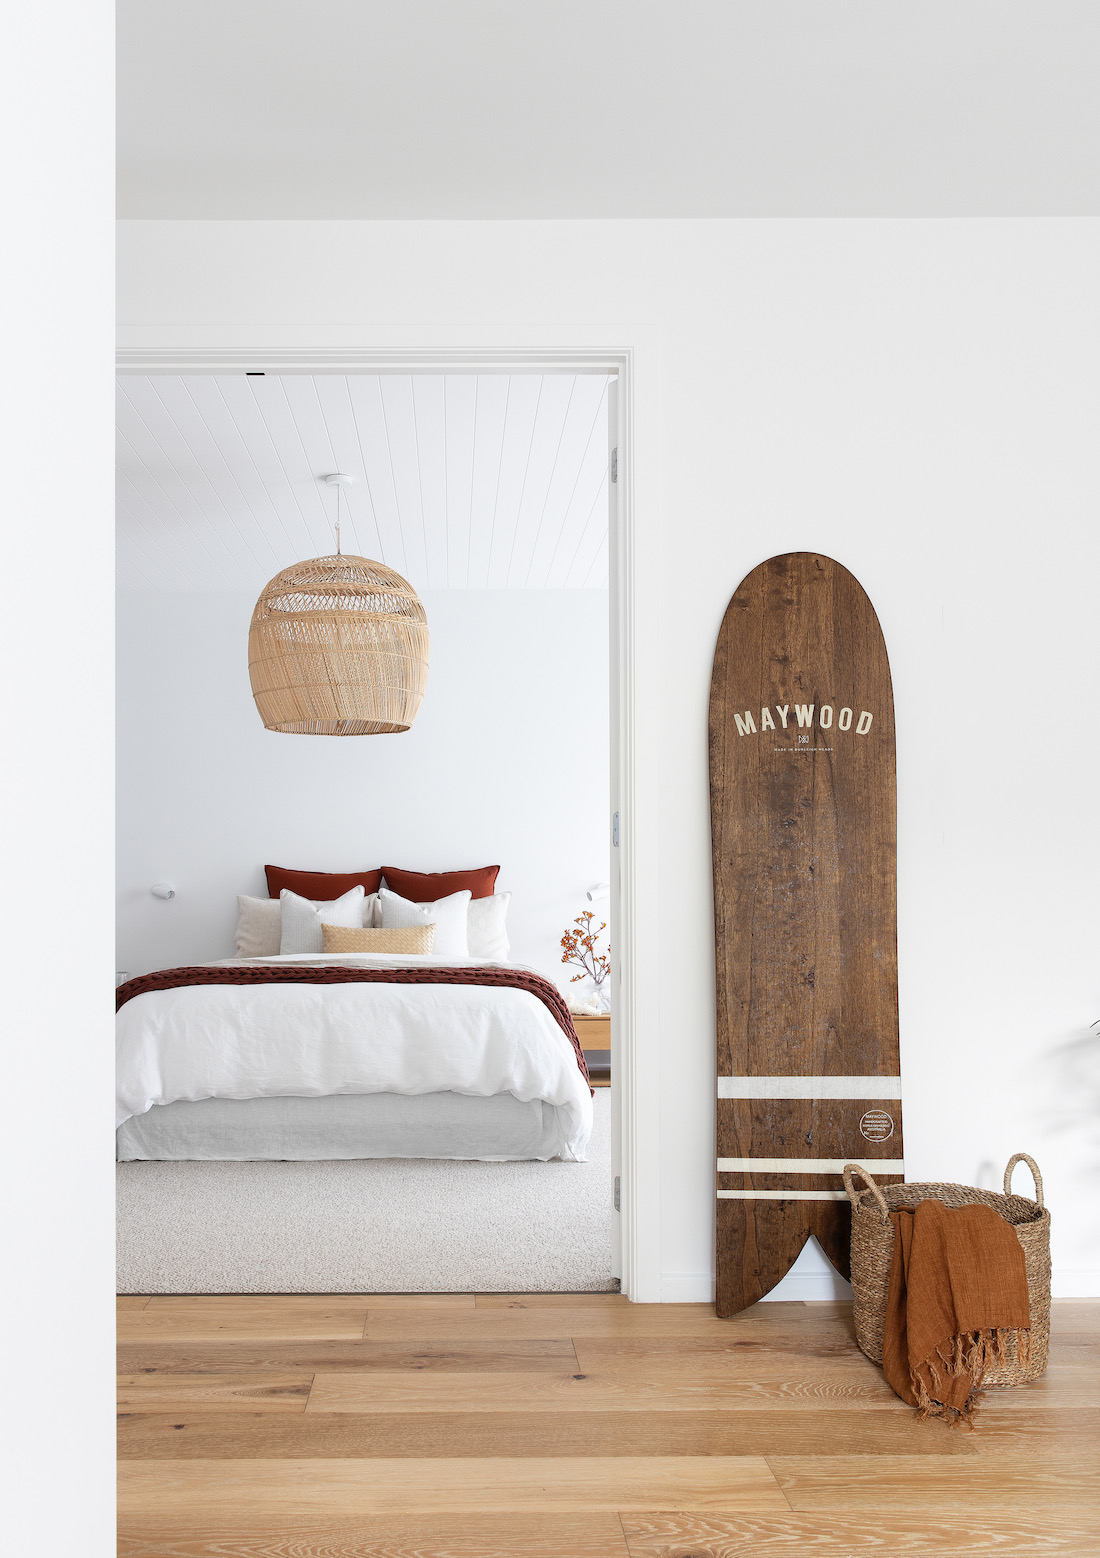 Bedroom with wooden surfboard